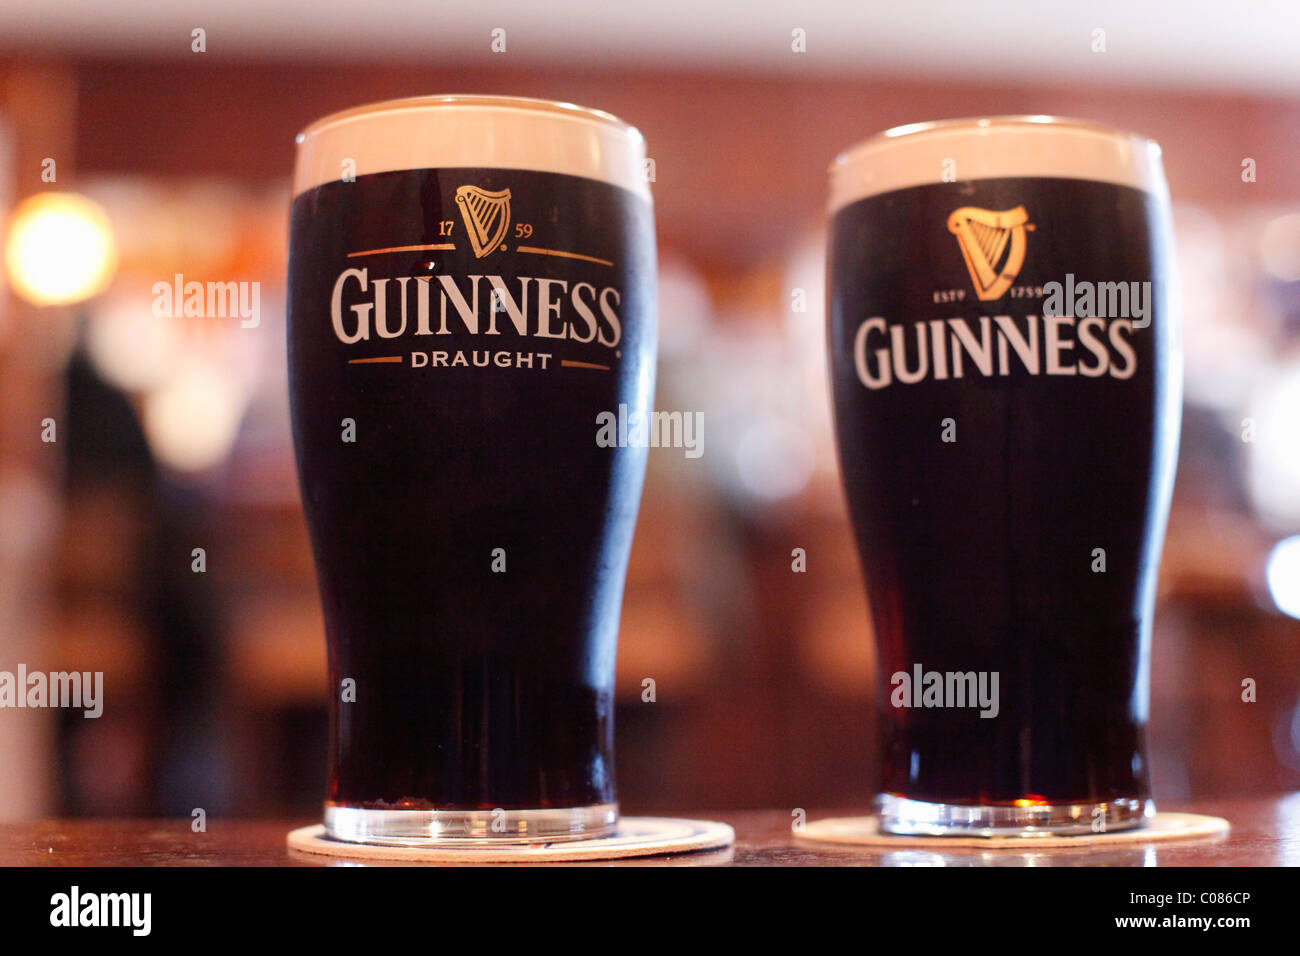 Pints of Guinness stout beer, Ireland, British Isles, Europe Stock Photo